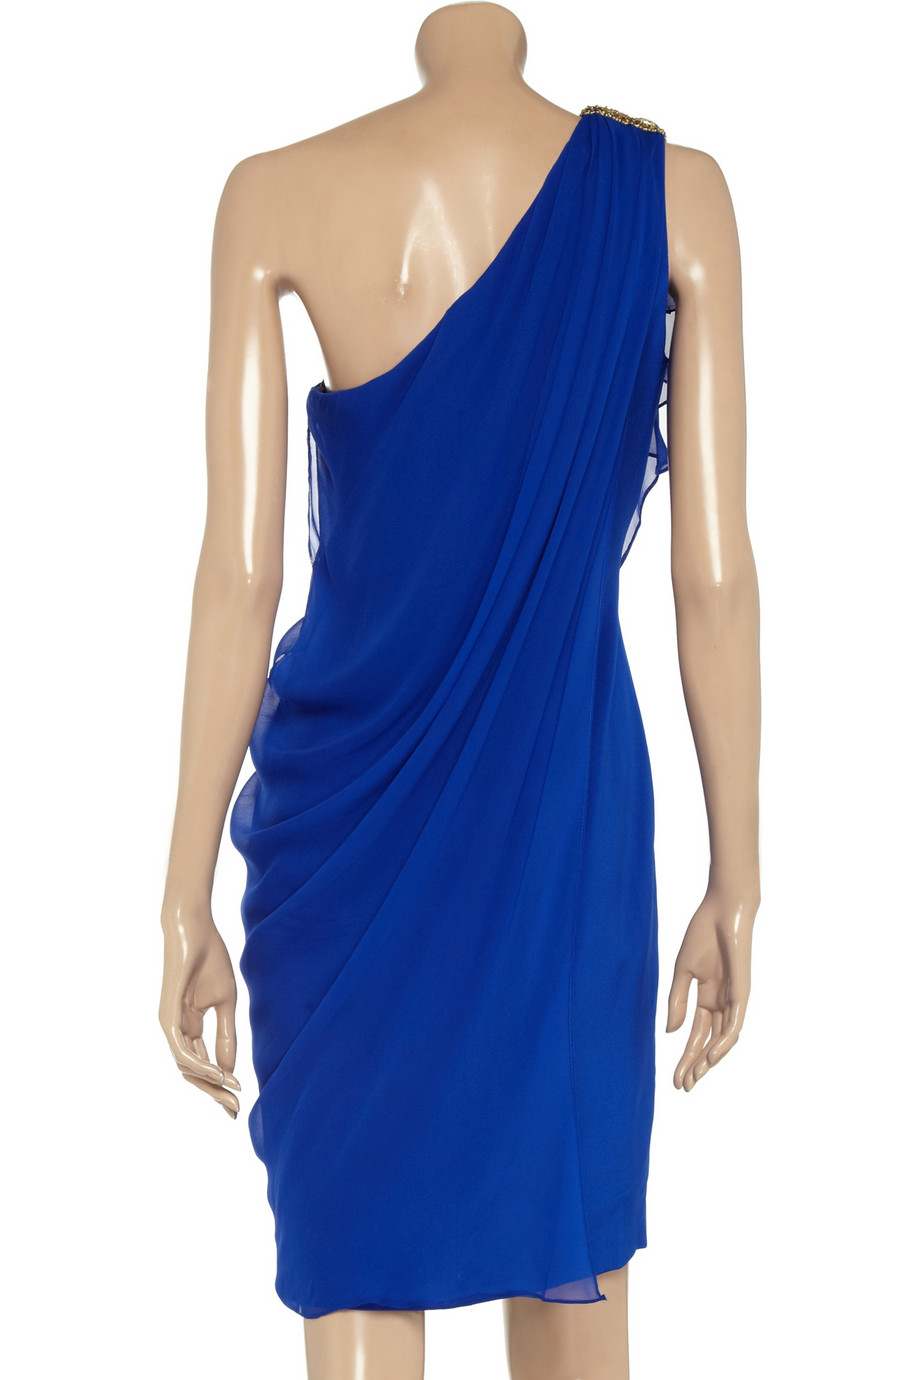 Lyst - Notte by marchesa One Shoulder Silk Chiffon Dress in Blue